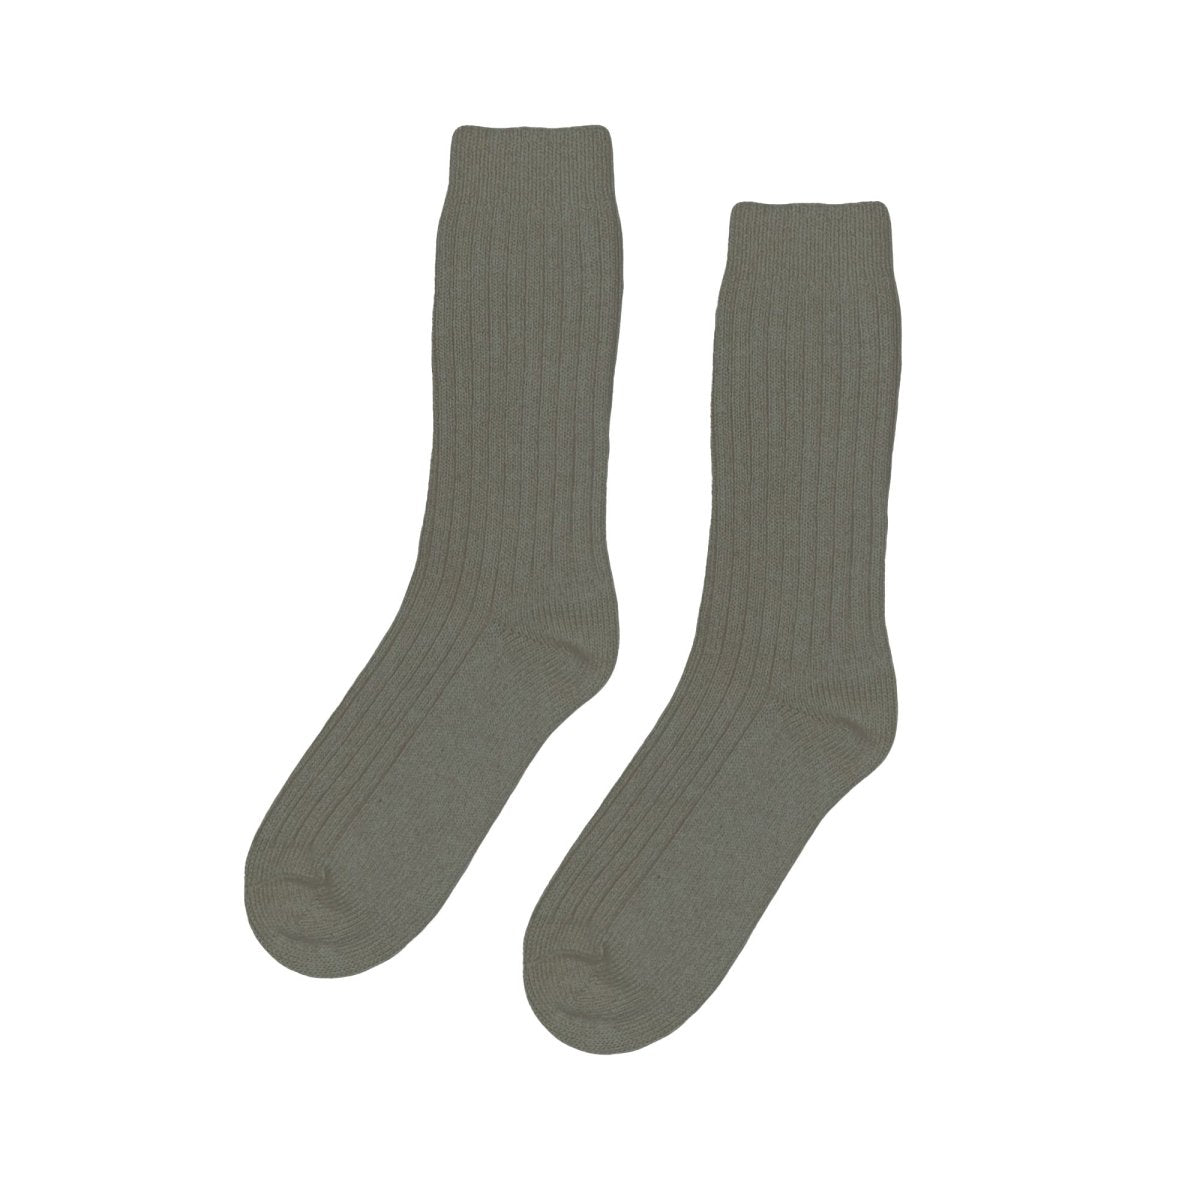 CS Merino wool Blend sock Dusty olive - KYOTO - Colorful Standard